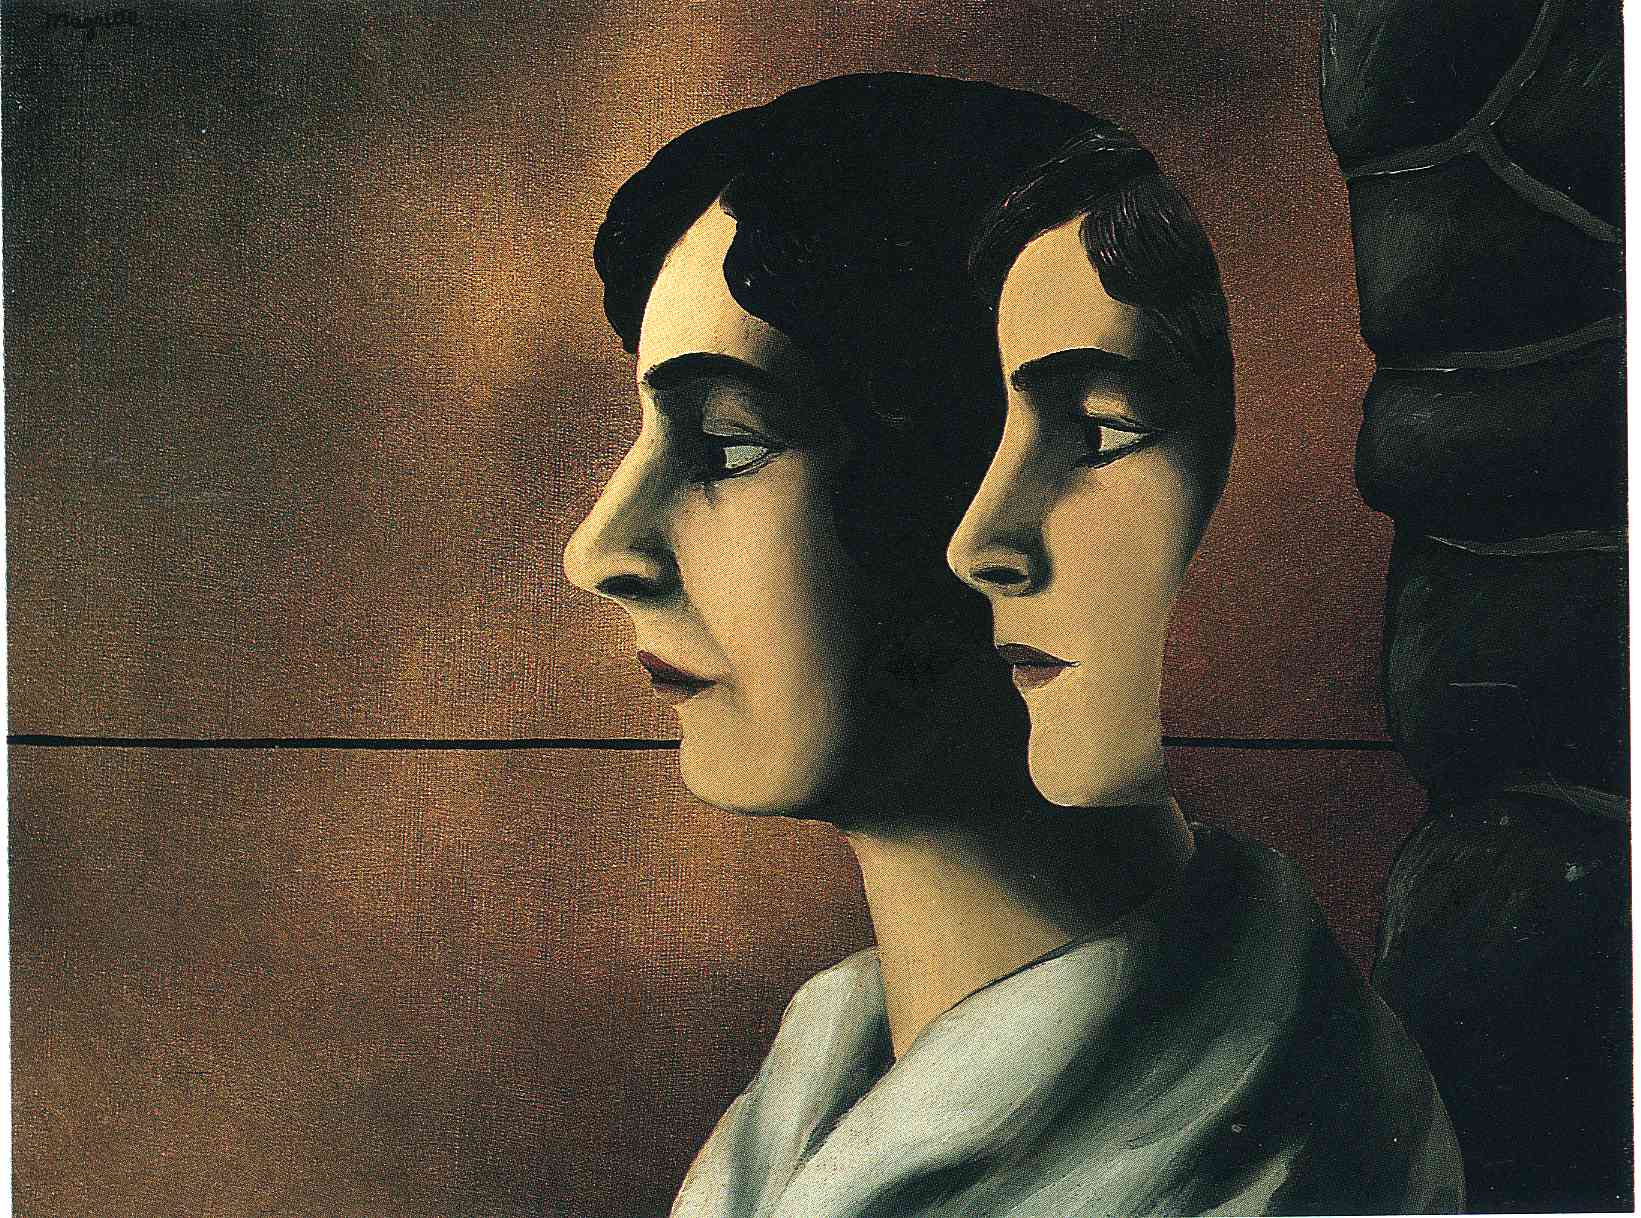 Faraway looks - Rene Magritte - faraway-looks(1)